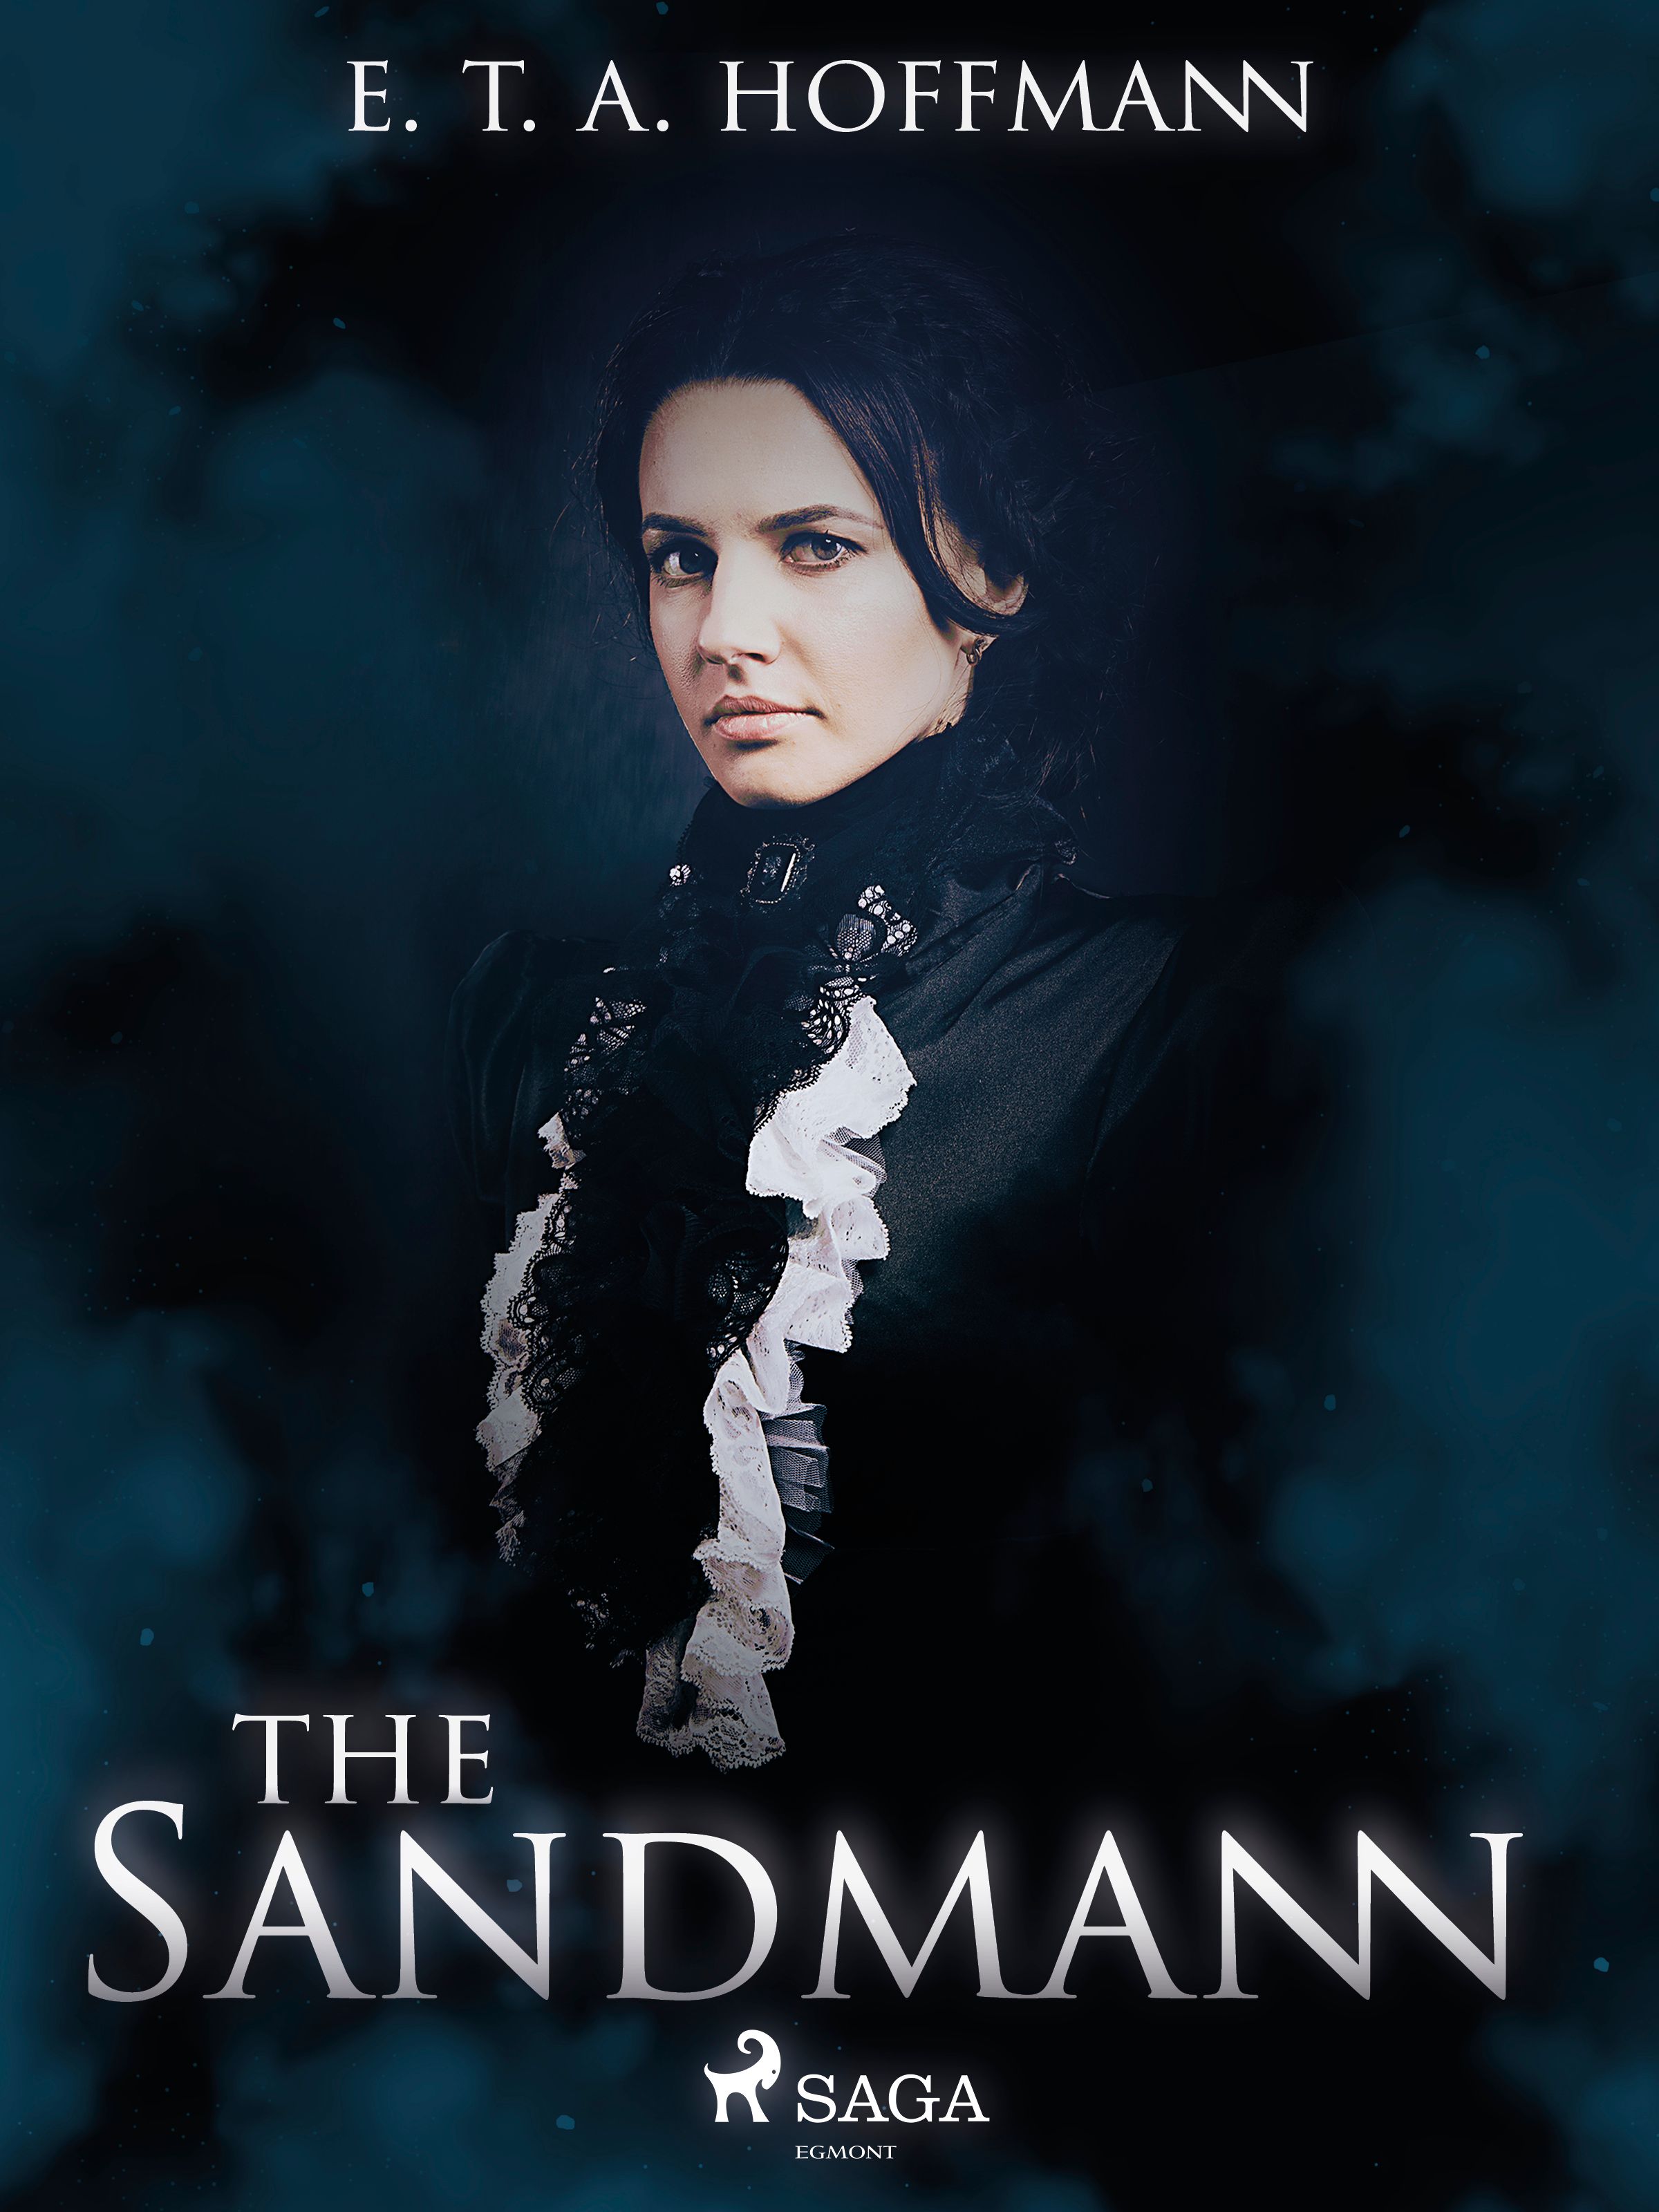 The Sandman, eBook by E.T.A. Hoffmann